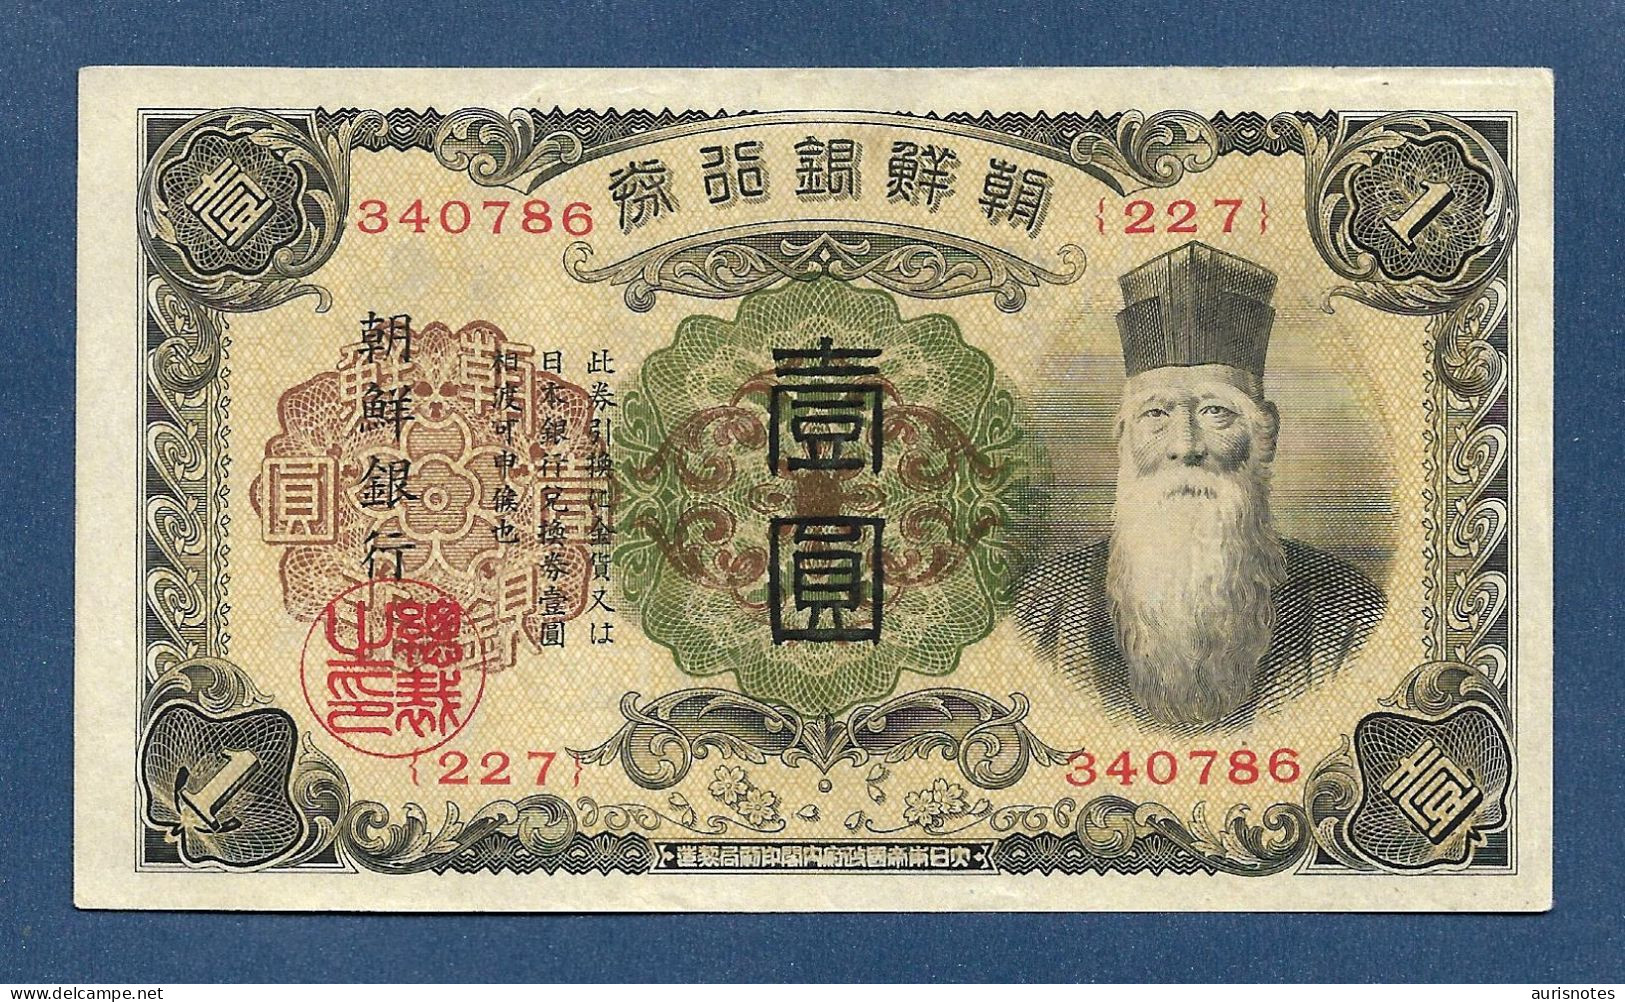 Korea 1 Yen 1932 P29 UNC- - Korea, South